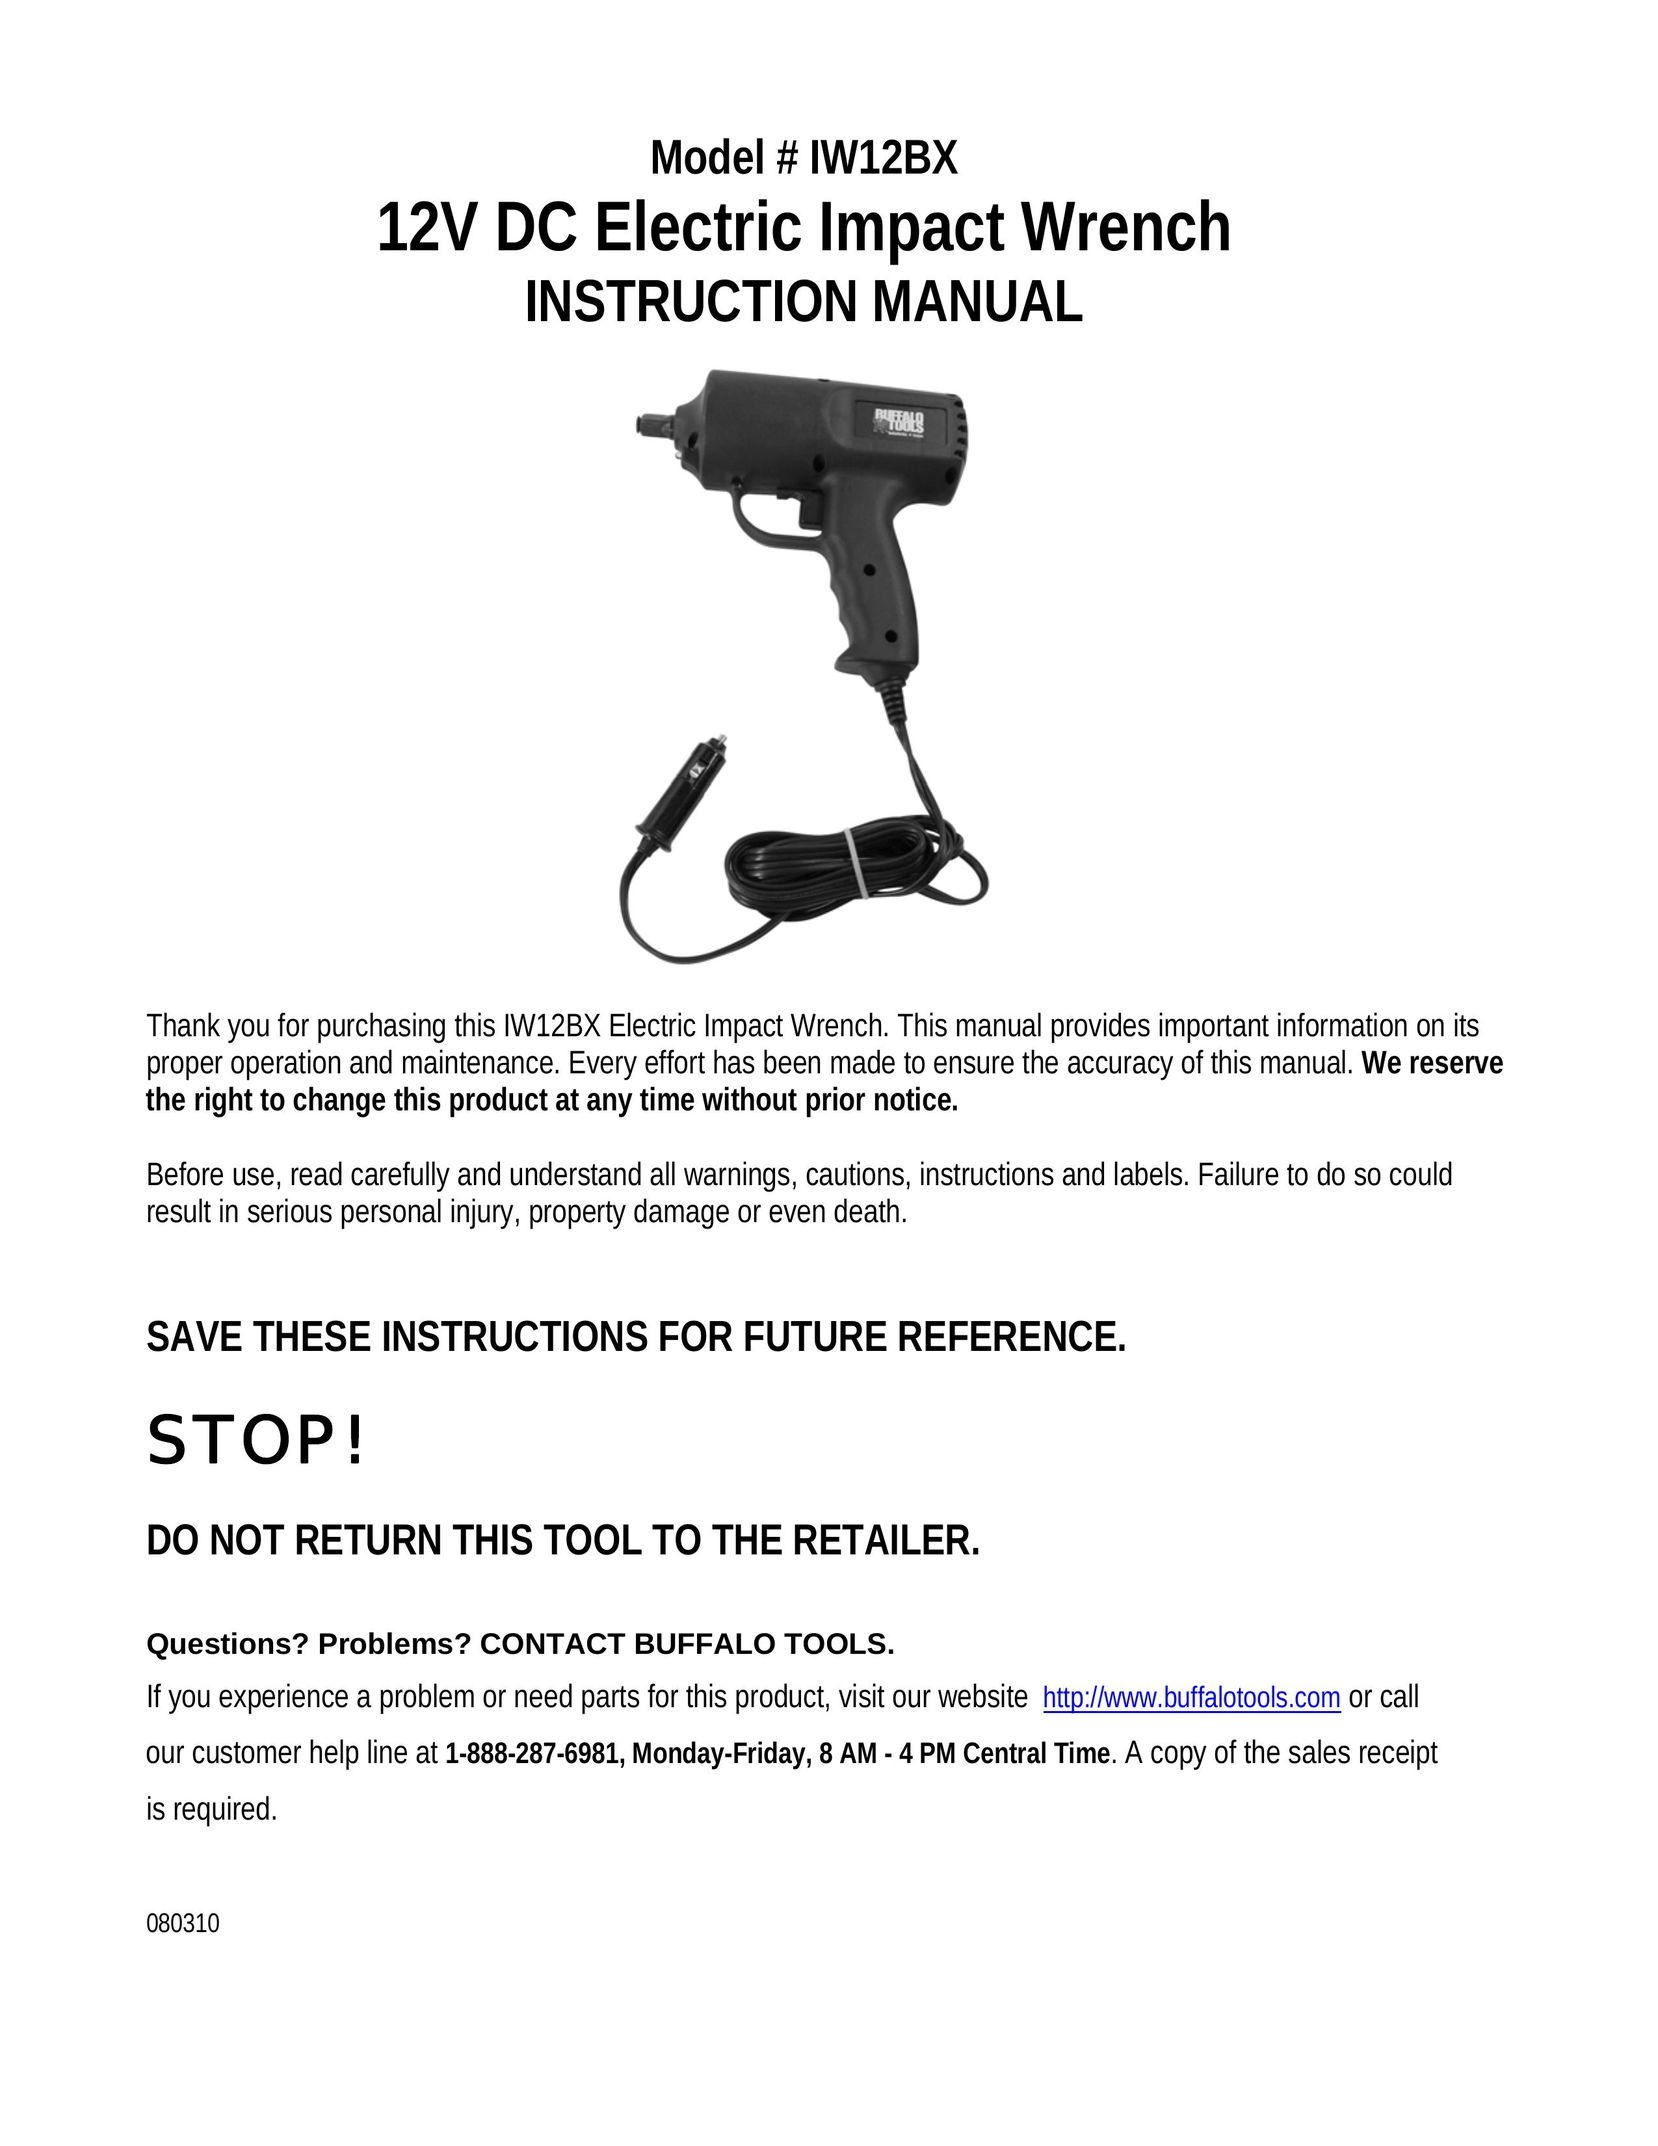 Buffalo Tools IW12BX 12V Impact Driver User Manual